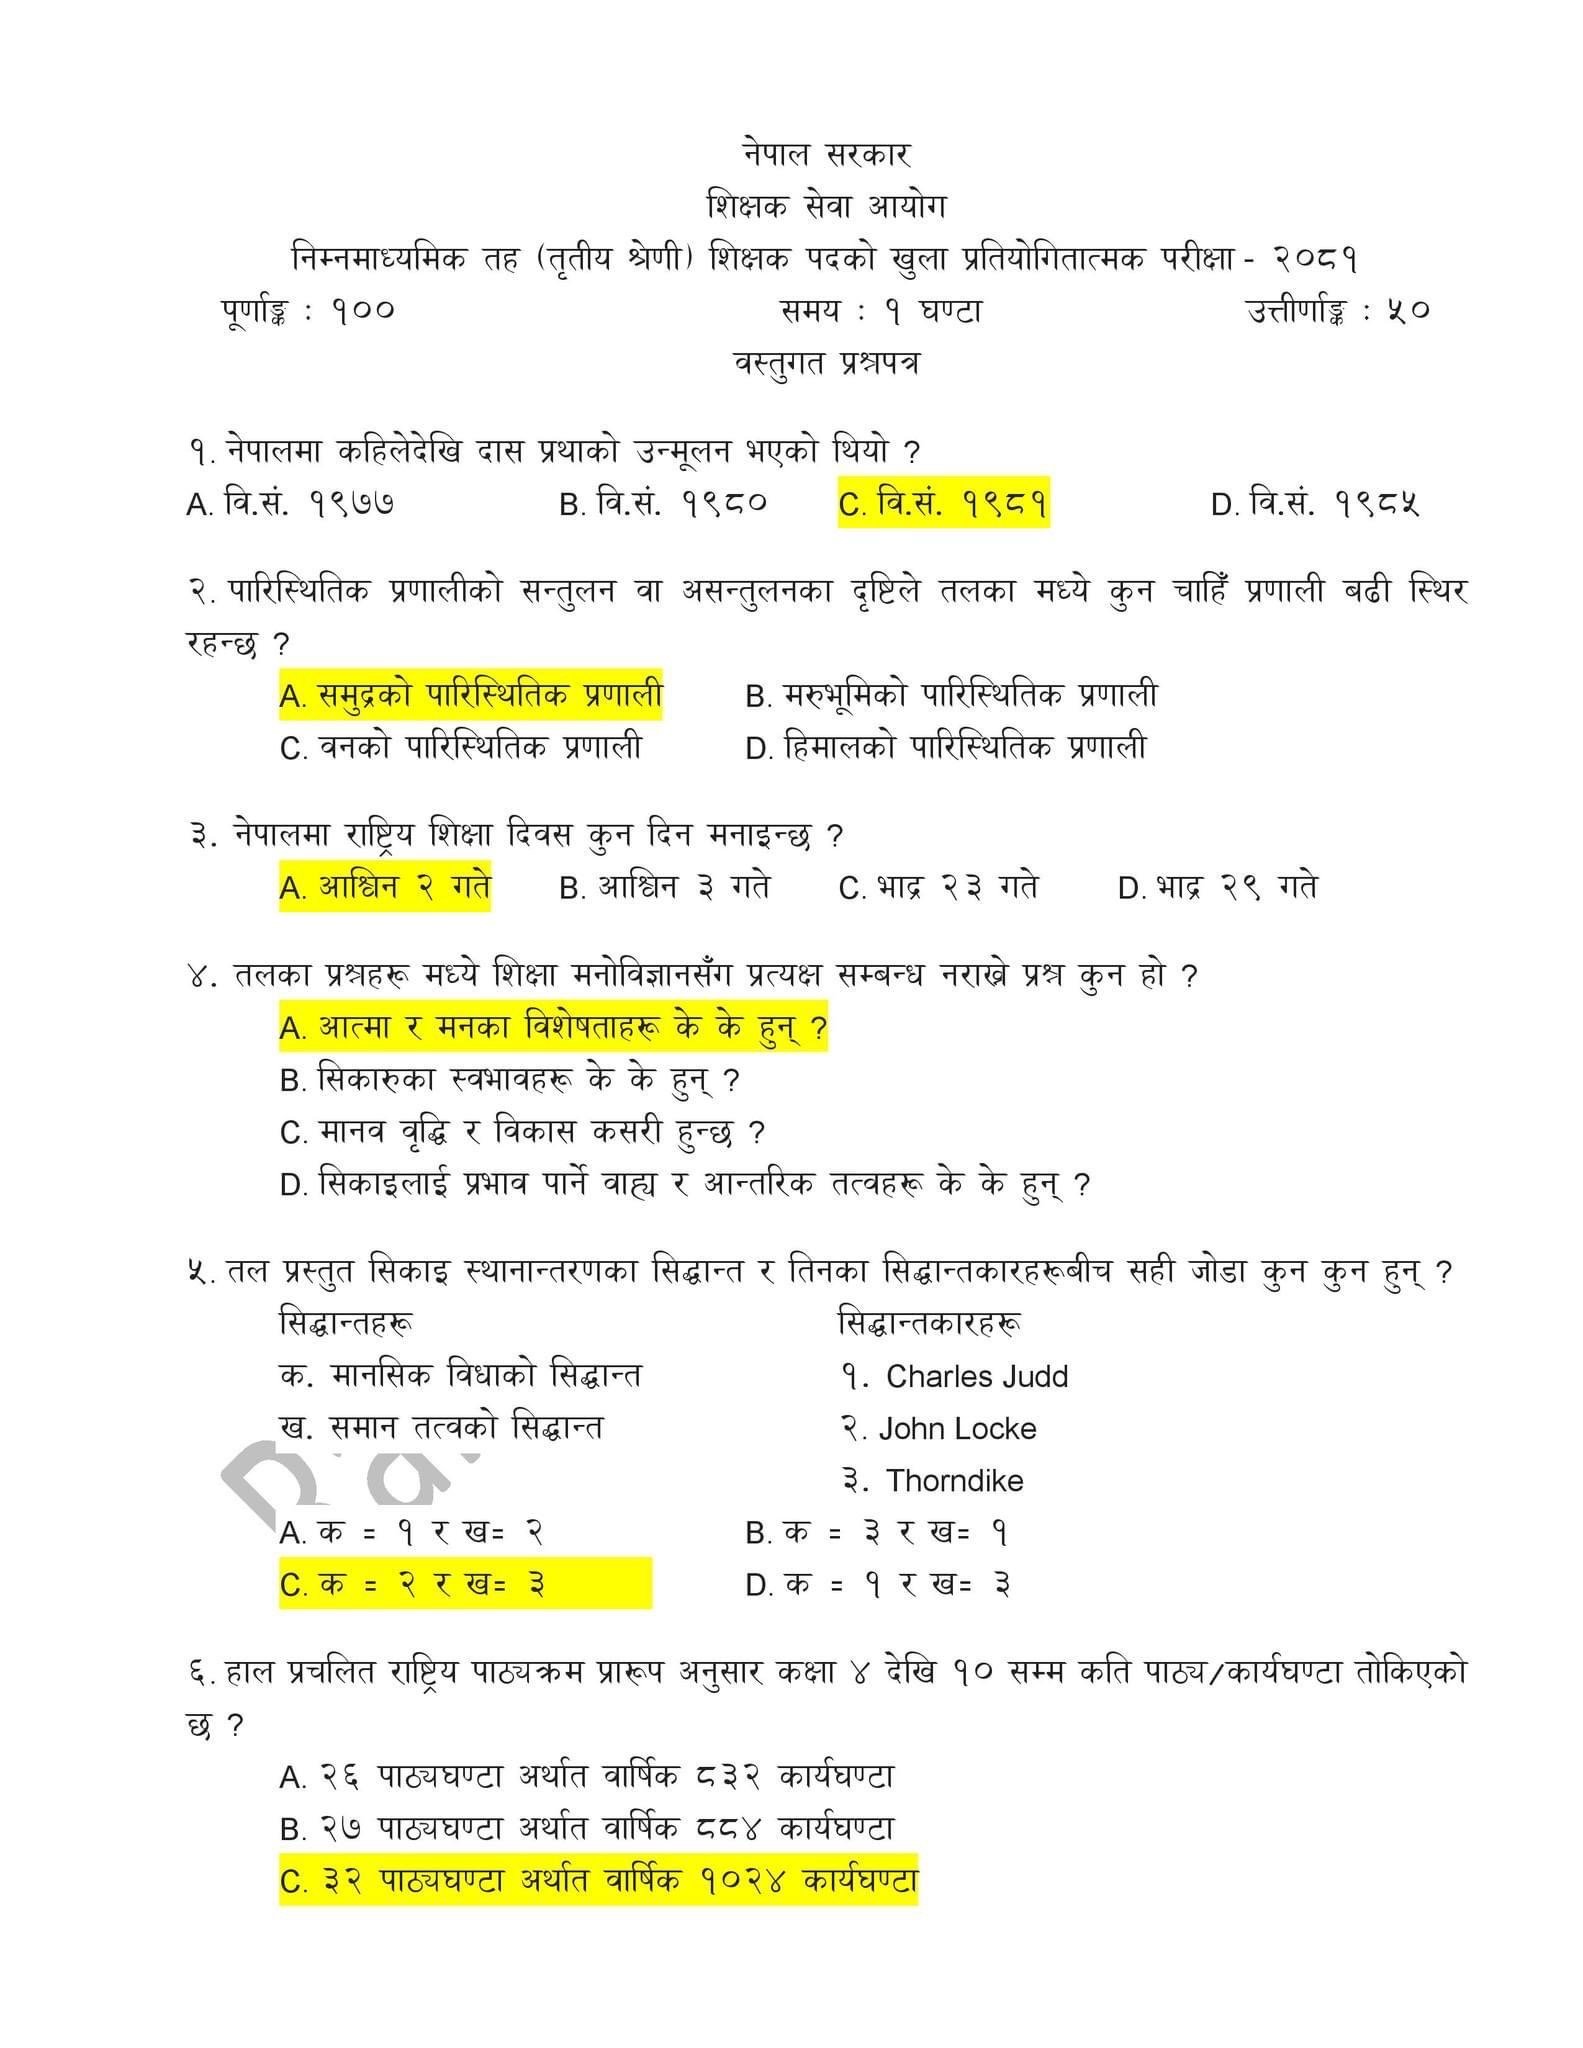 Nimabi Questions 2081 | Shikshak Sewa Aayog Nimabi Shikshak Exam Questions 2081 | Nimabi Shikshak Exam First Paper Question 2081